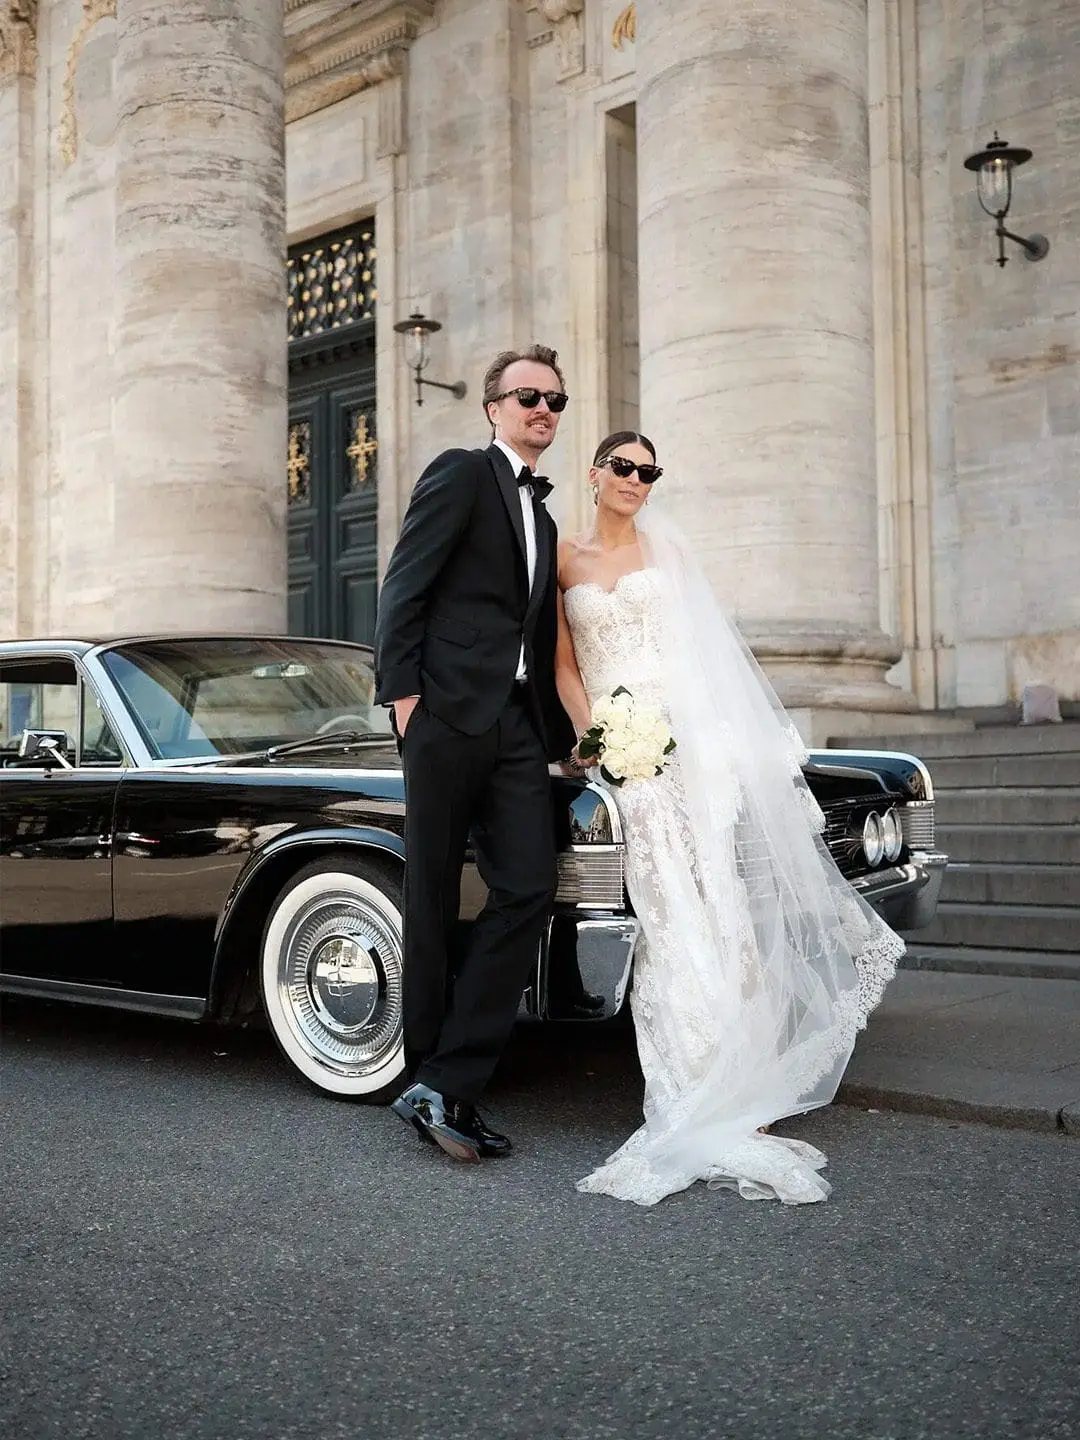 Stylish couple by vintage car captured by Nordic Wedding wedding photographer